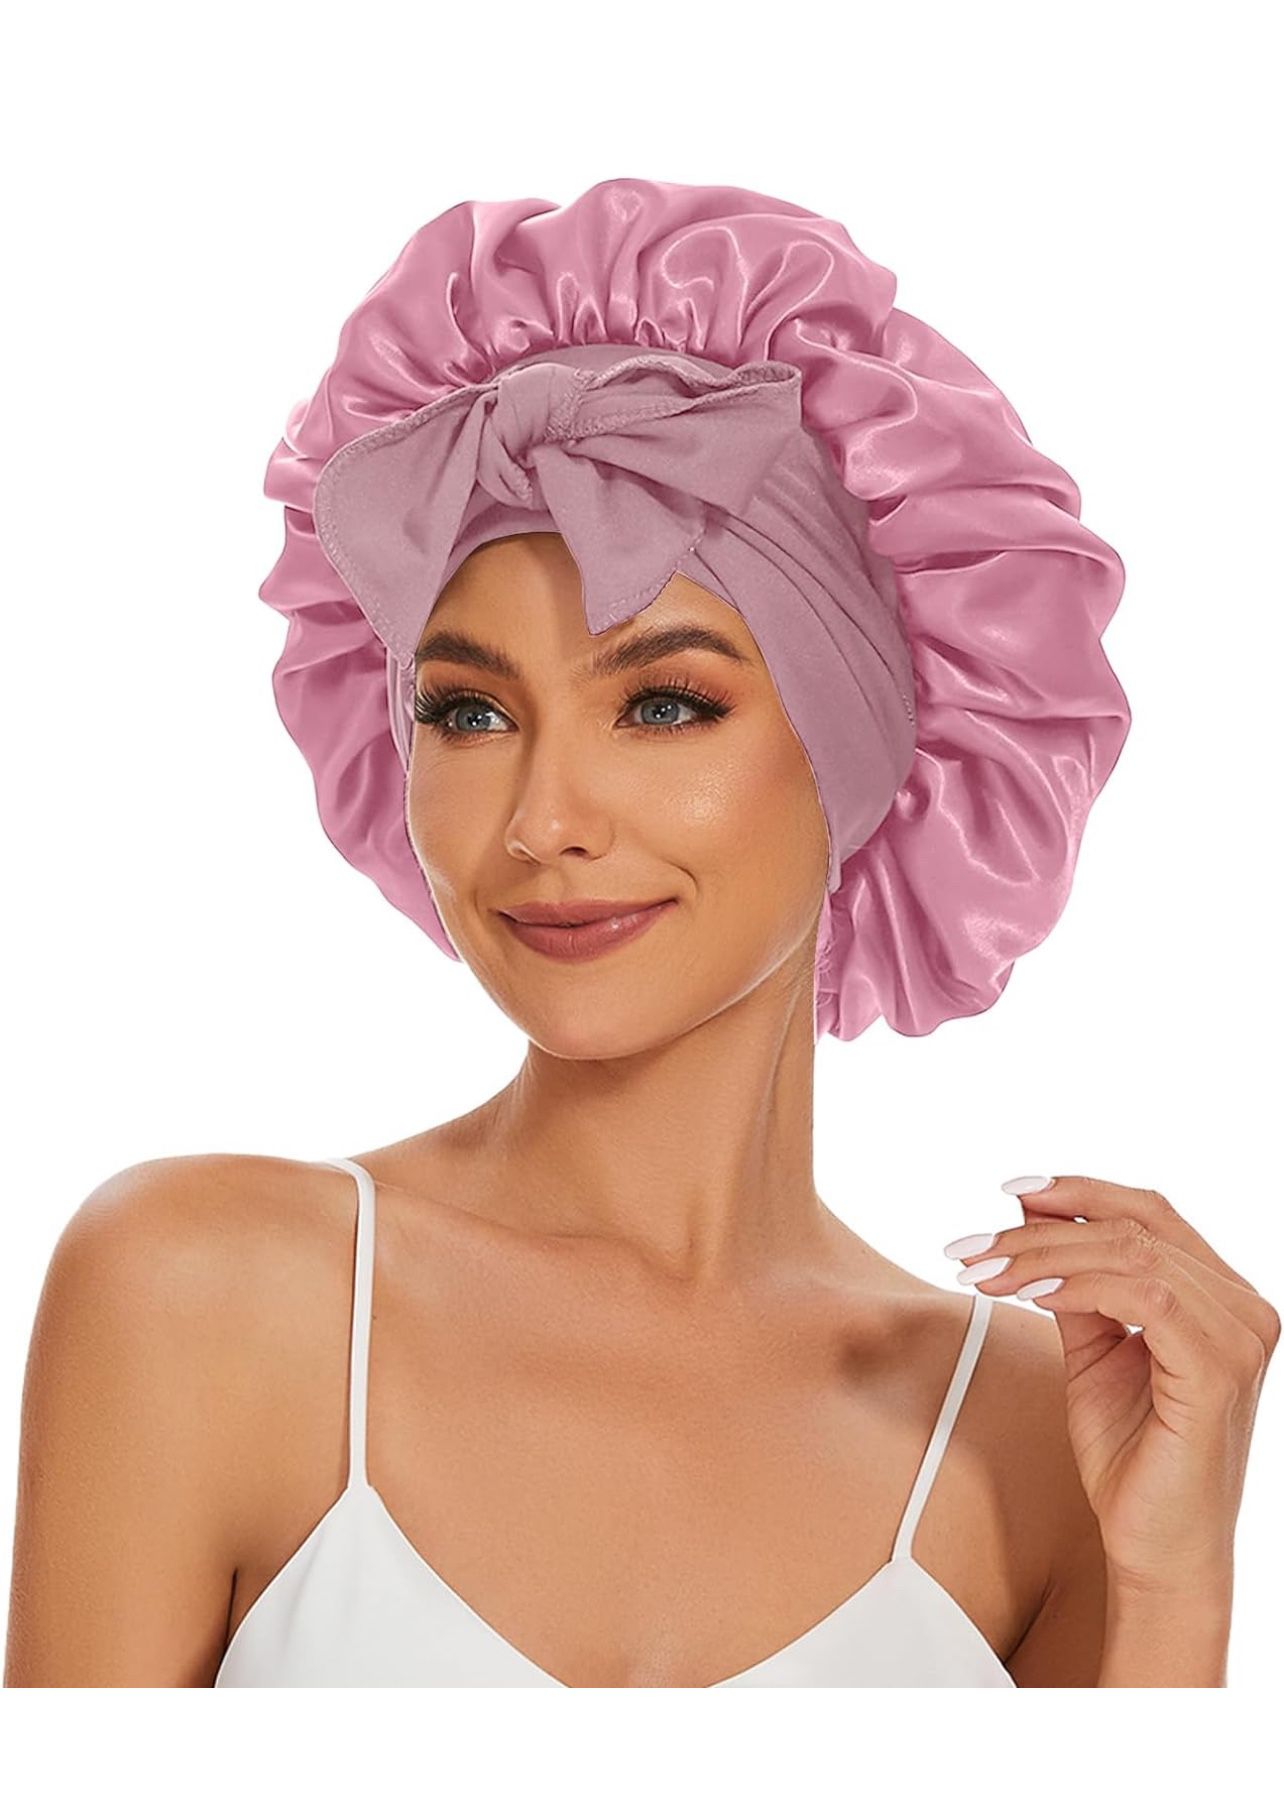 Brandnew Satin Silk Bonnet Hair Bonnet for Sleeping Jumbo Sleep Cap, Bonnet for Women Curly Hair, Double Layer Bonnet with Tie Band, Shower Cap